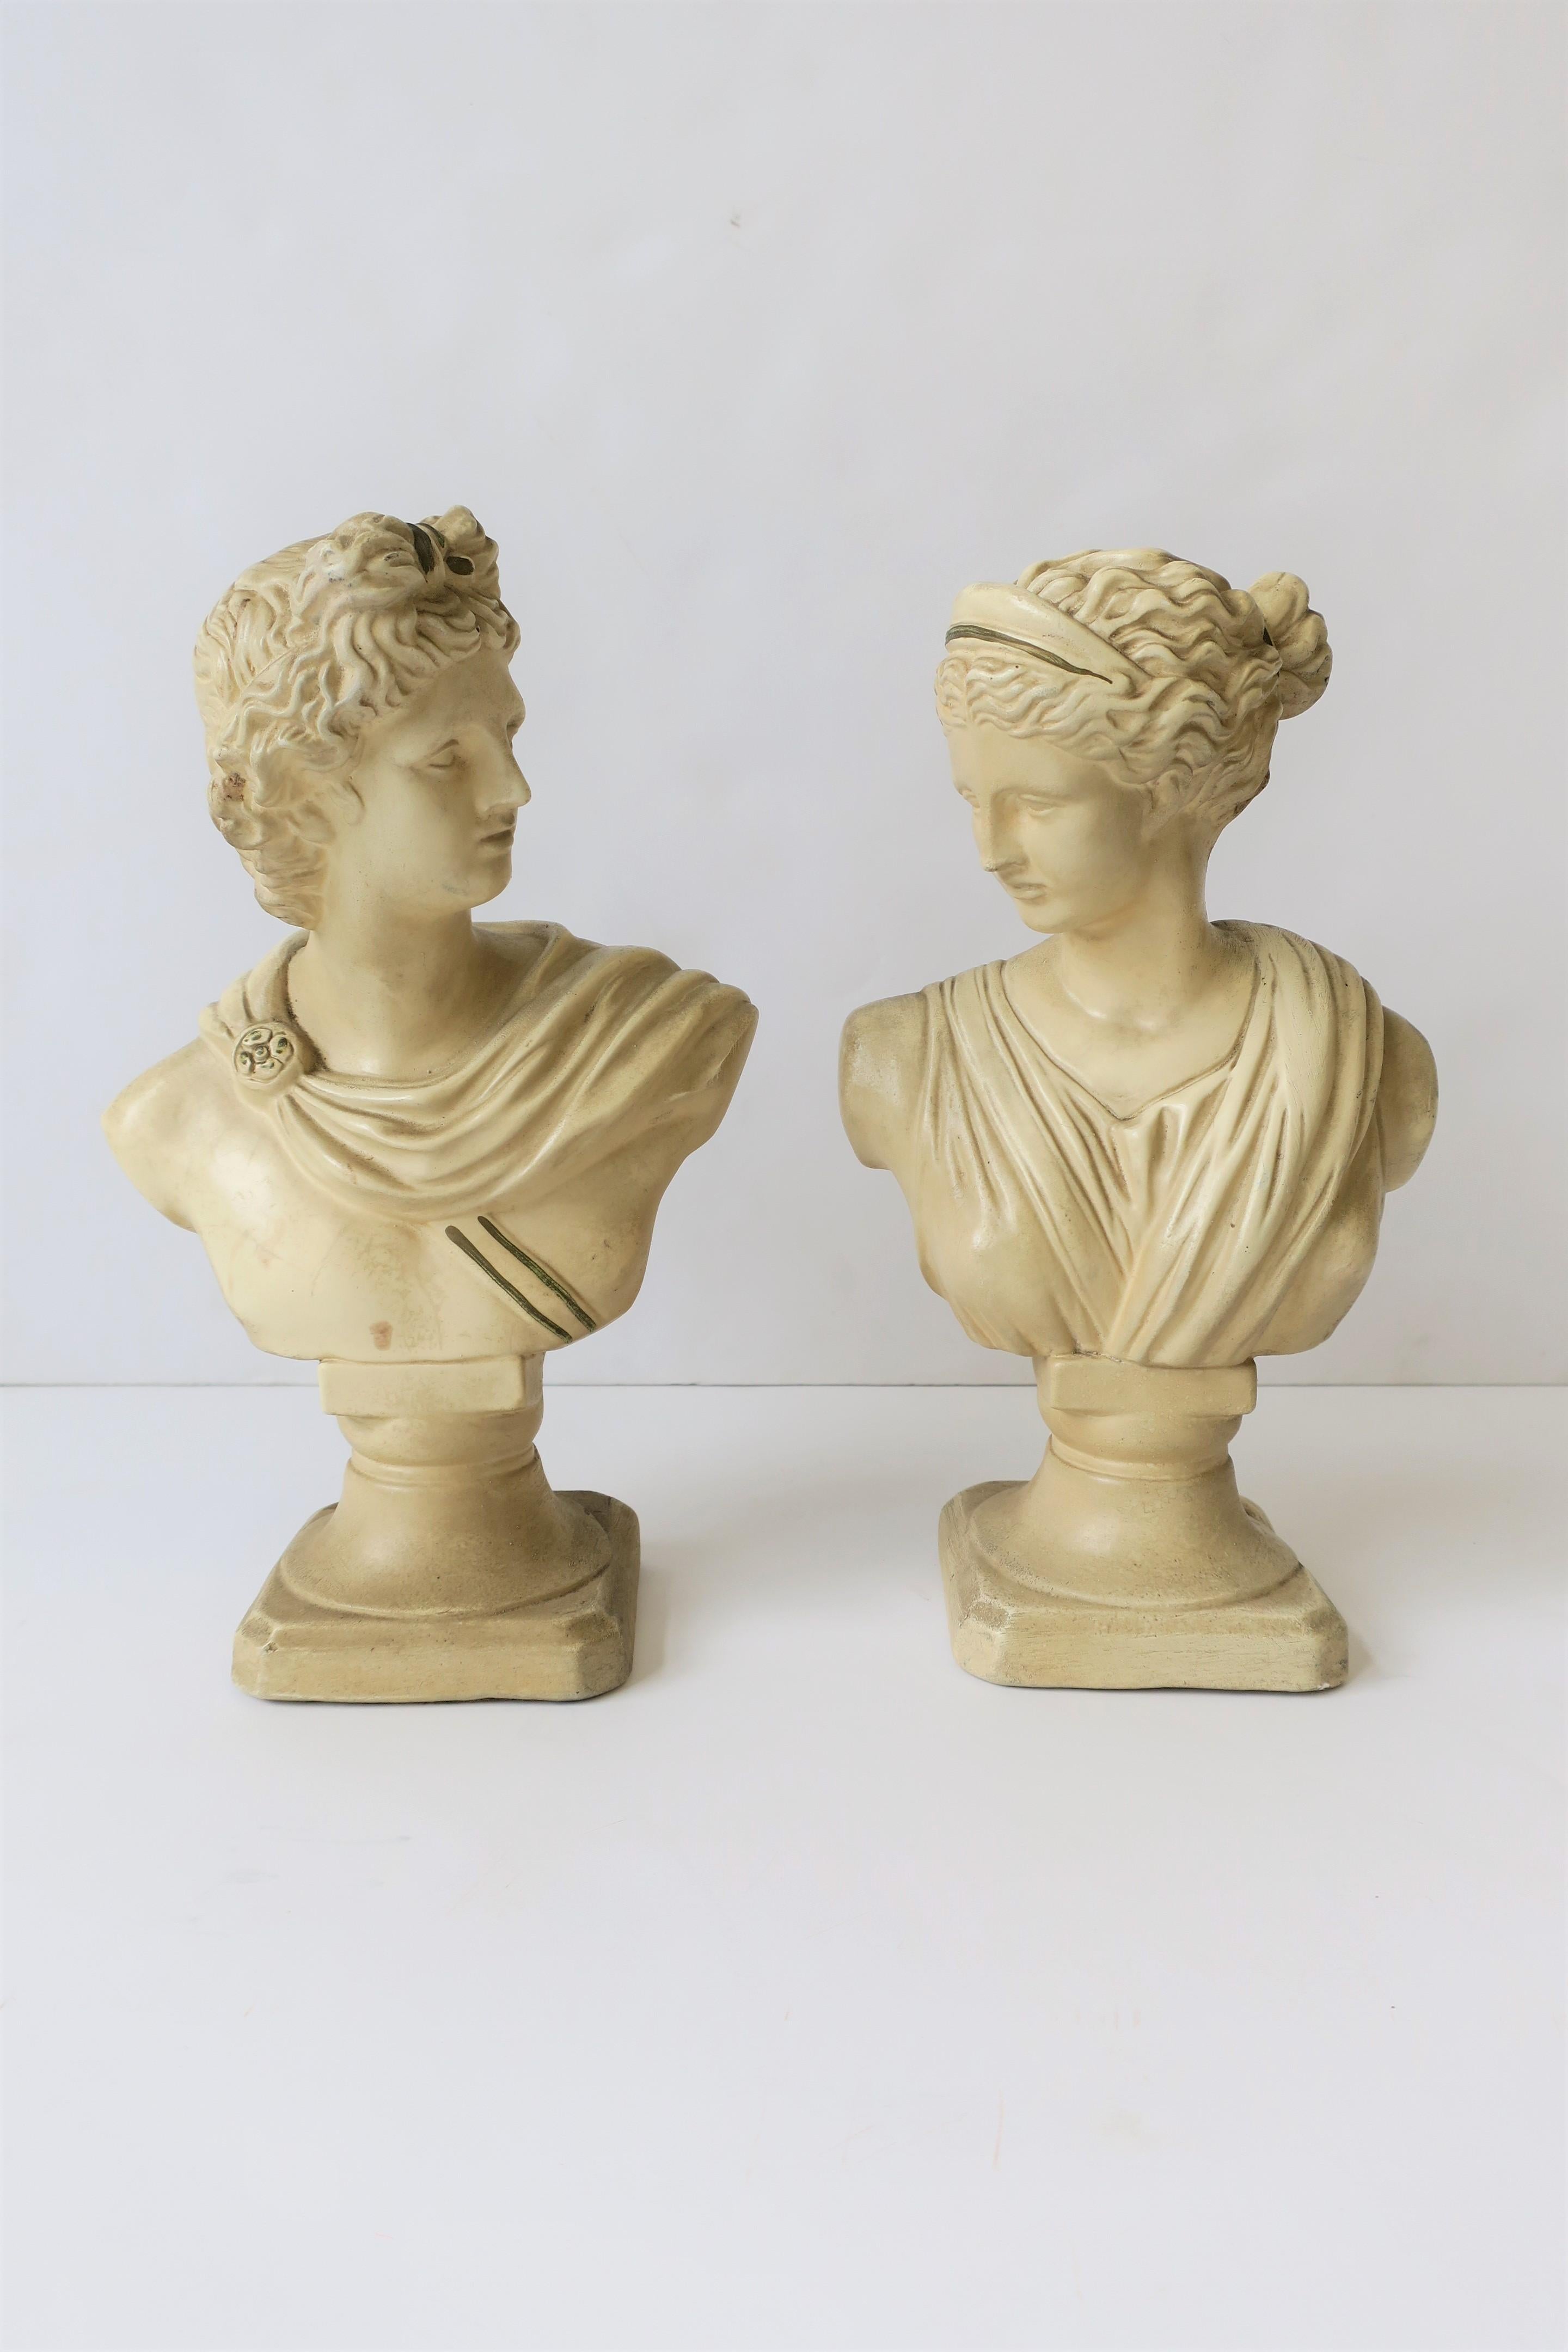 20th Century Pair of Midcentury Italian White Plaster Classic Roman Bust Sculptures